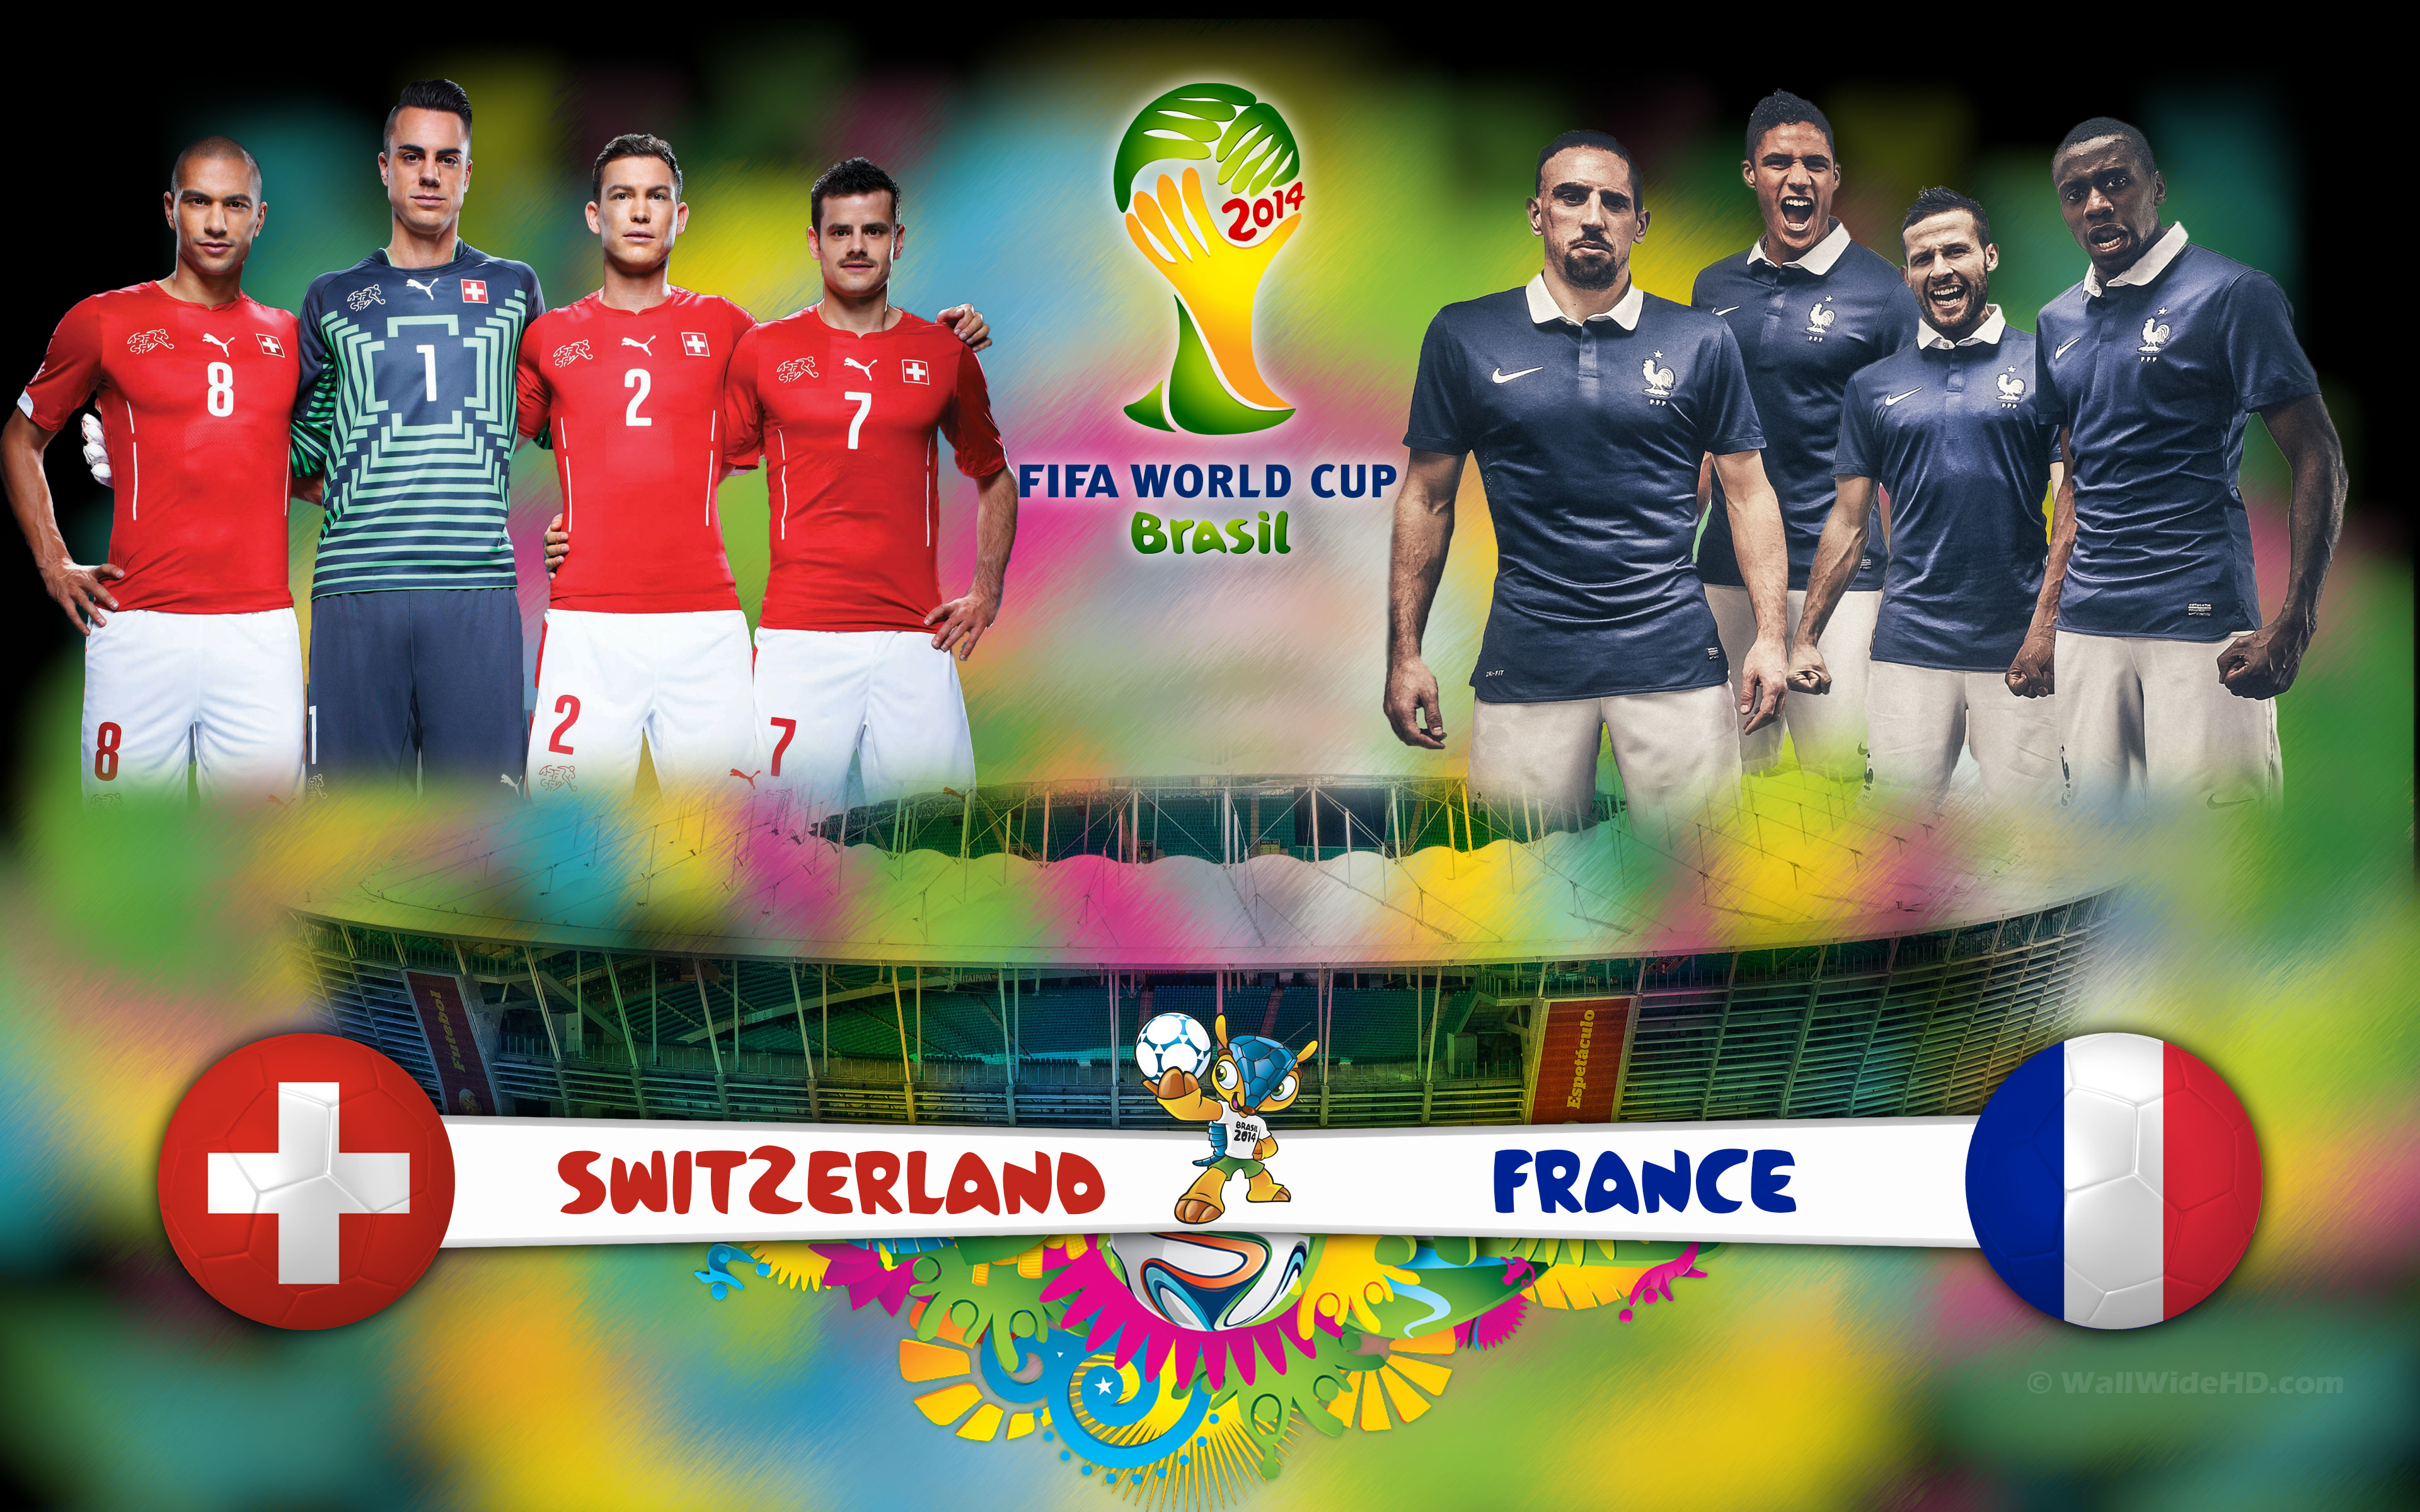 Group E Switzerland – 2014 World Cup